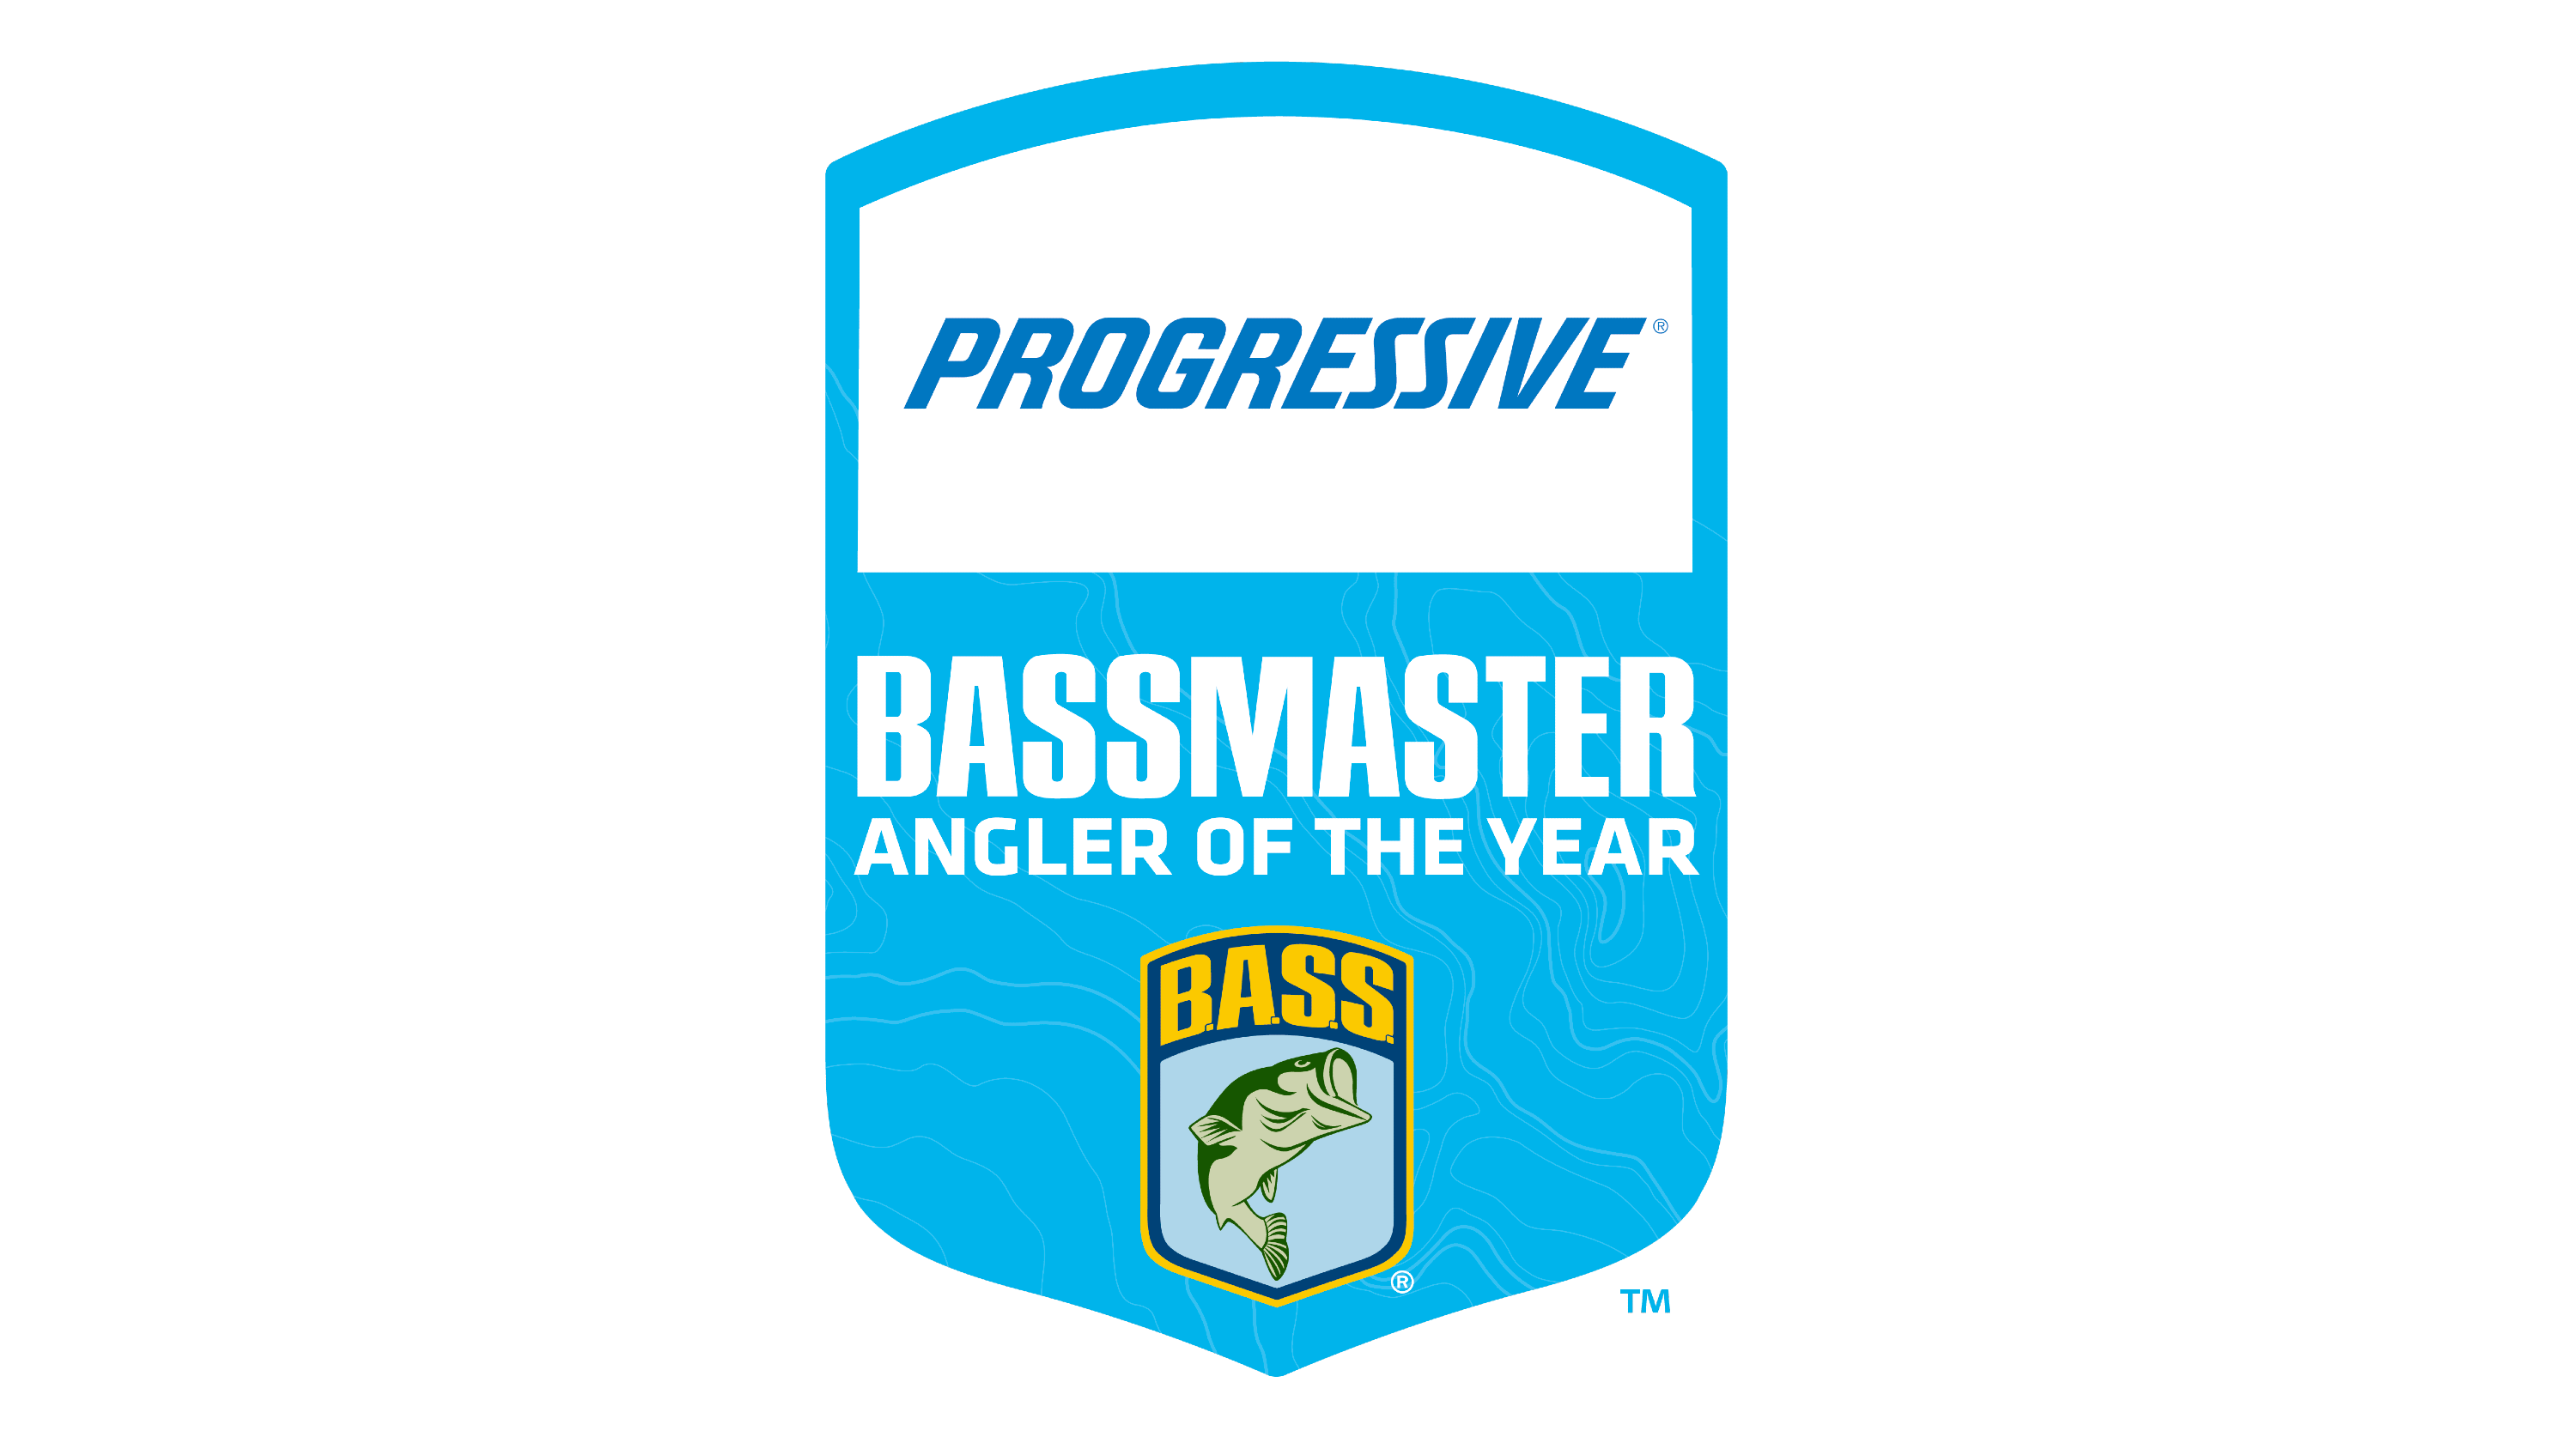 Progressive Insurance claims Bassmaster AOY Race